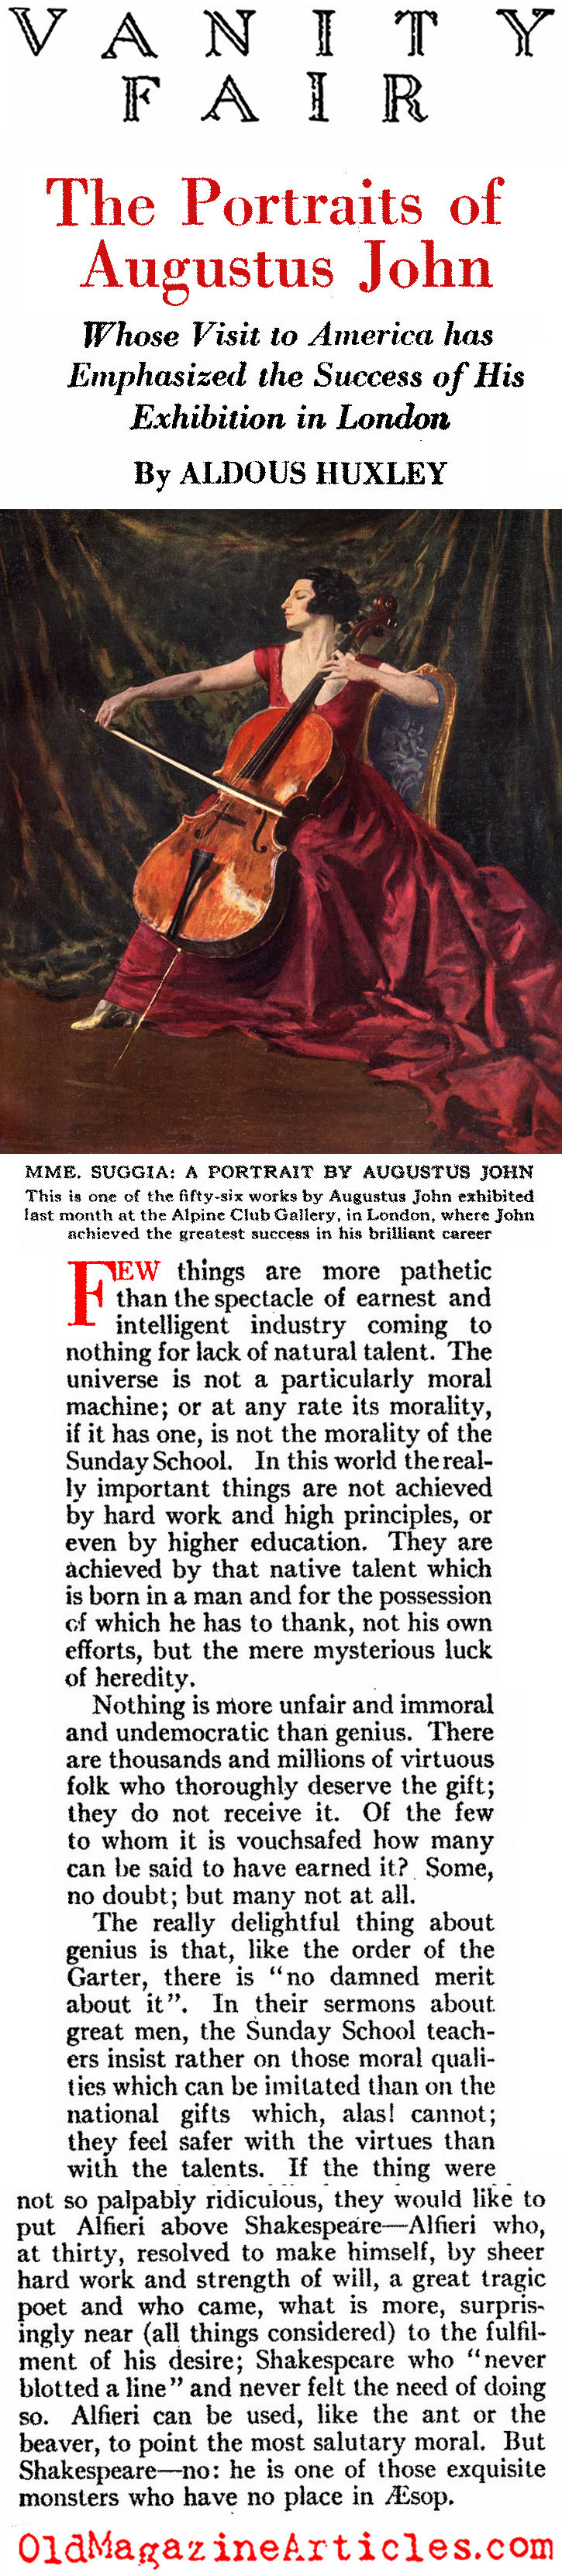 Augustus John by Aldous Huxley  (Vanity Fair Magazine, Undated)